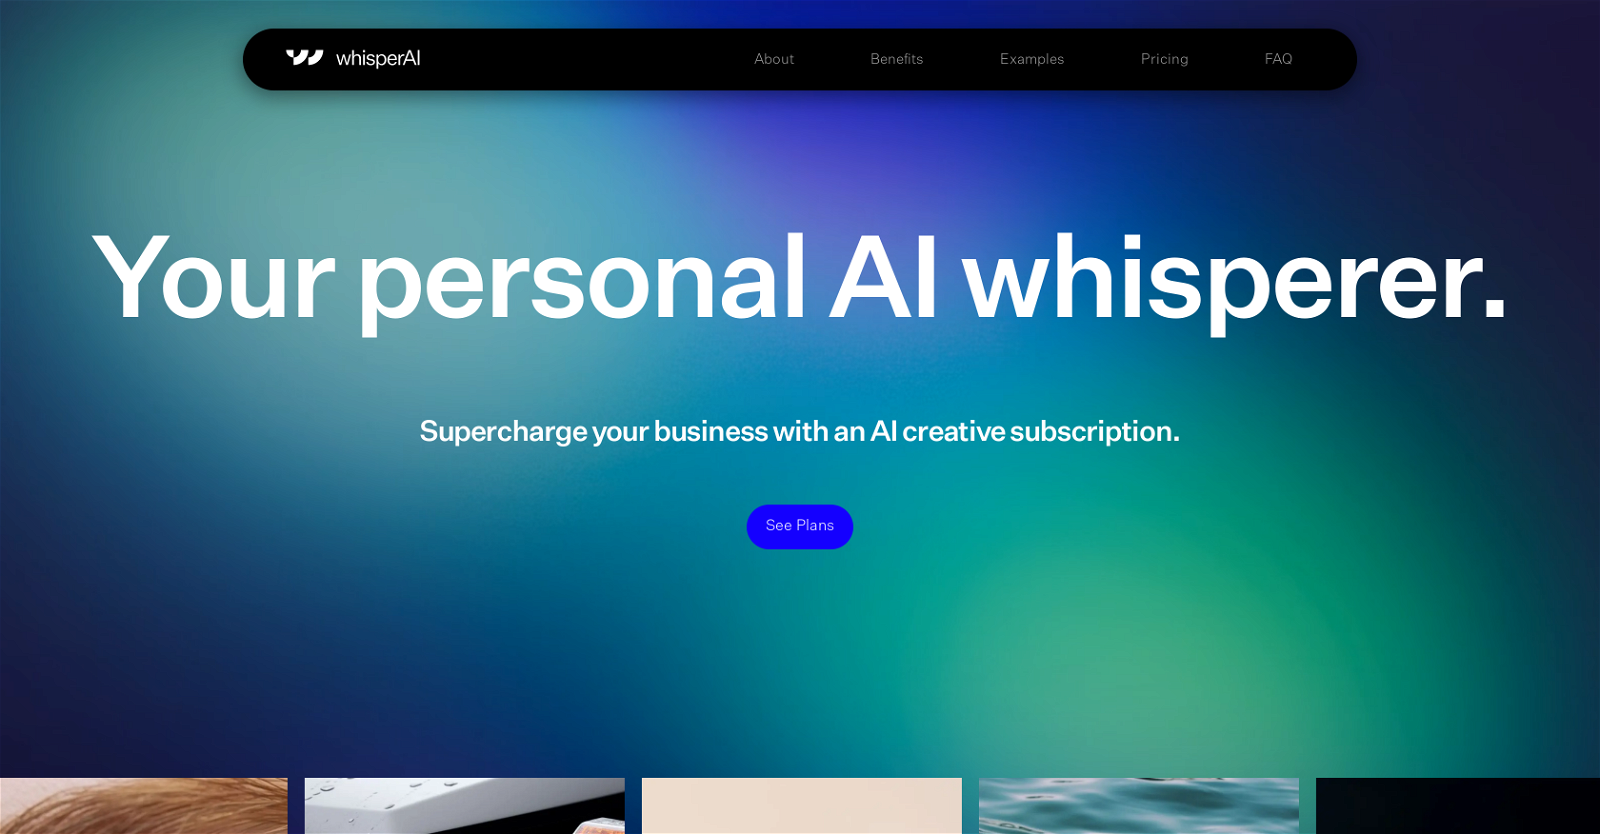 WhisperAI website